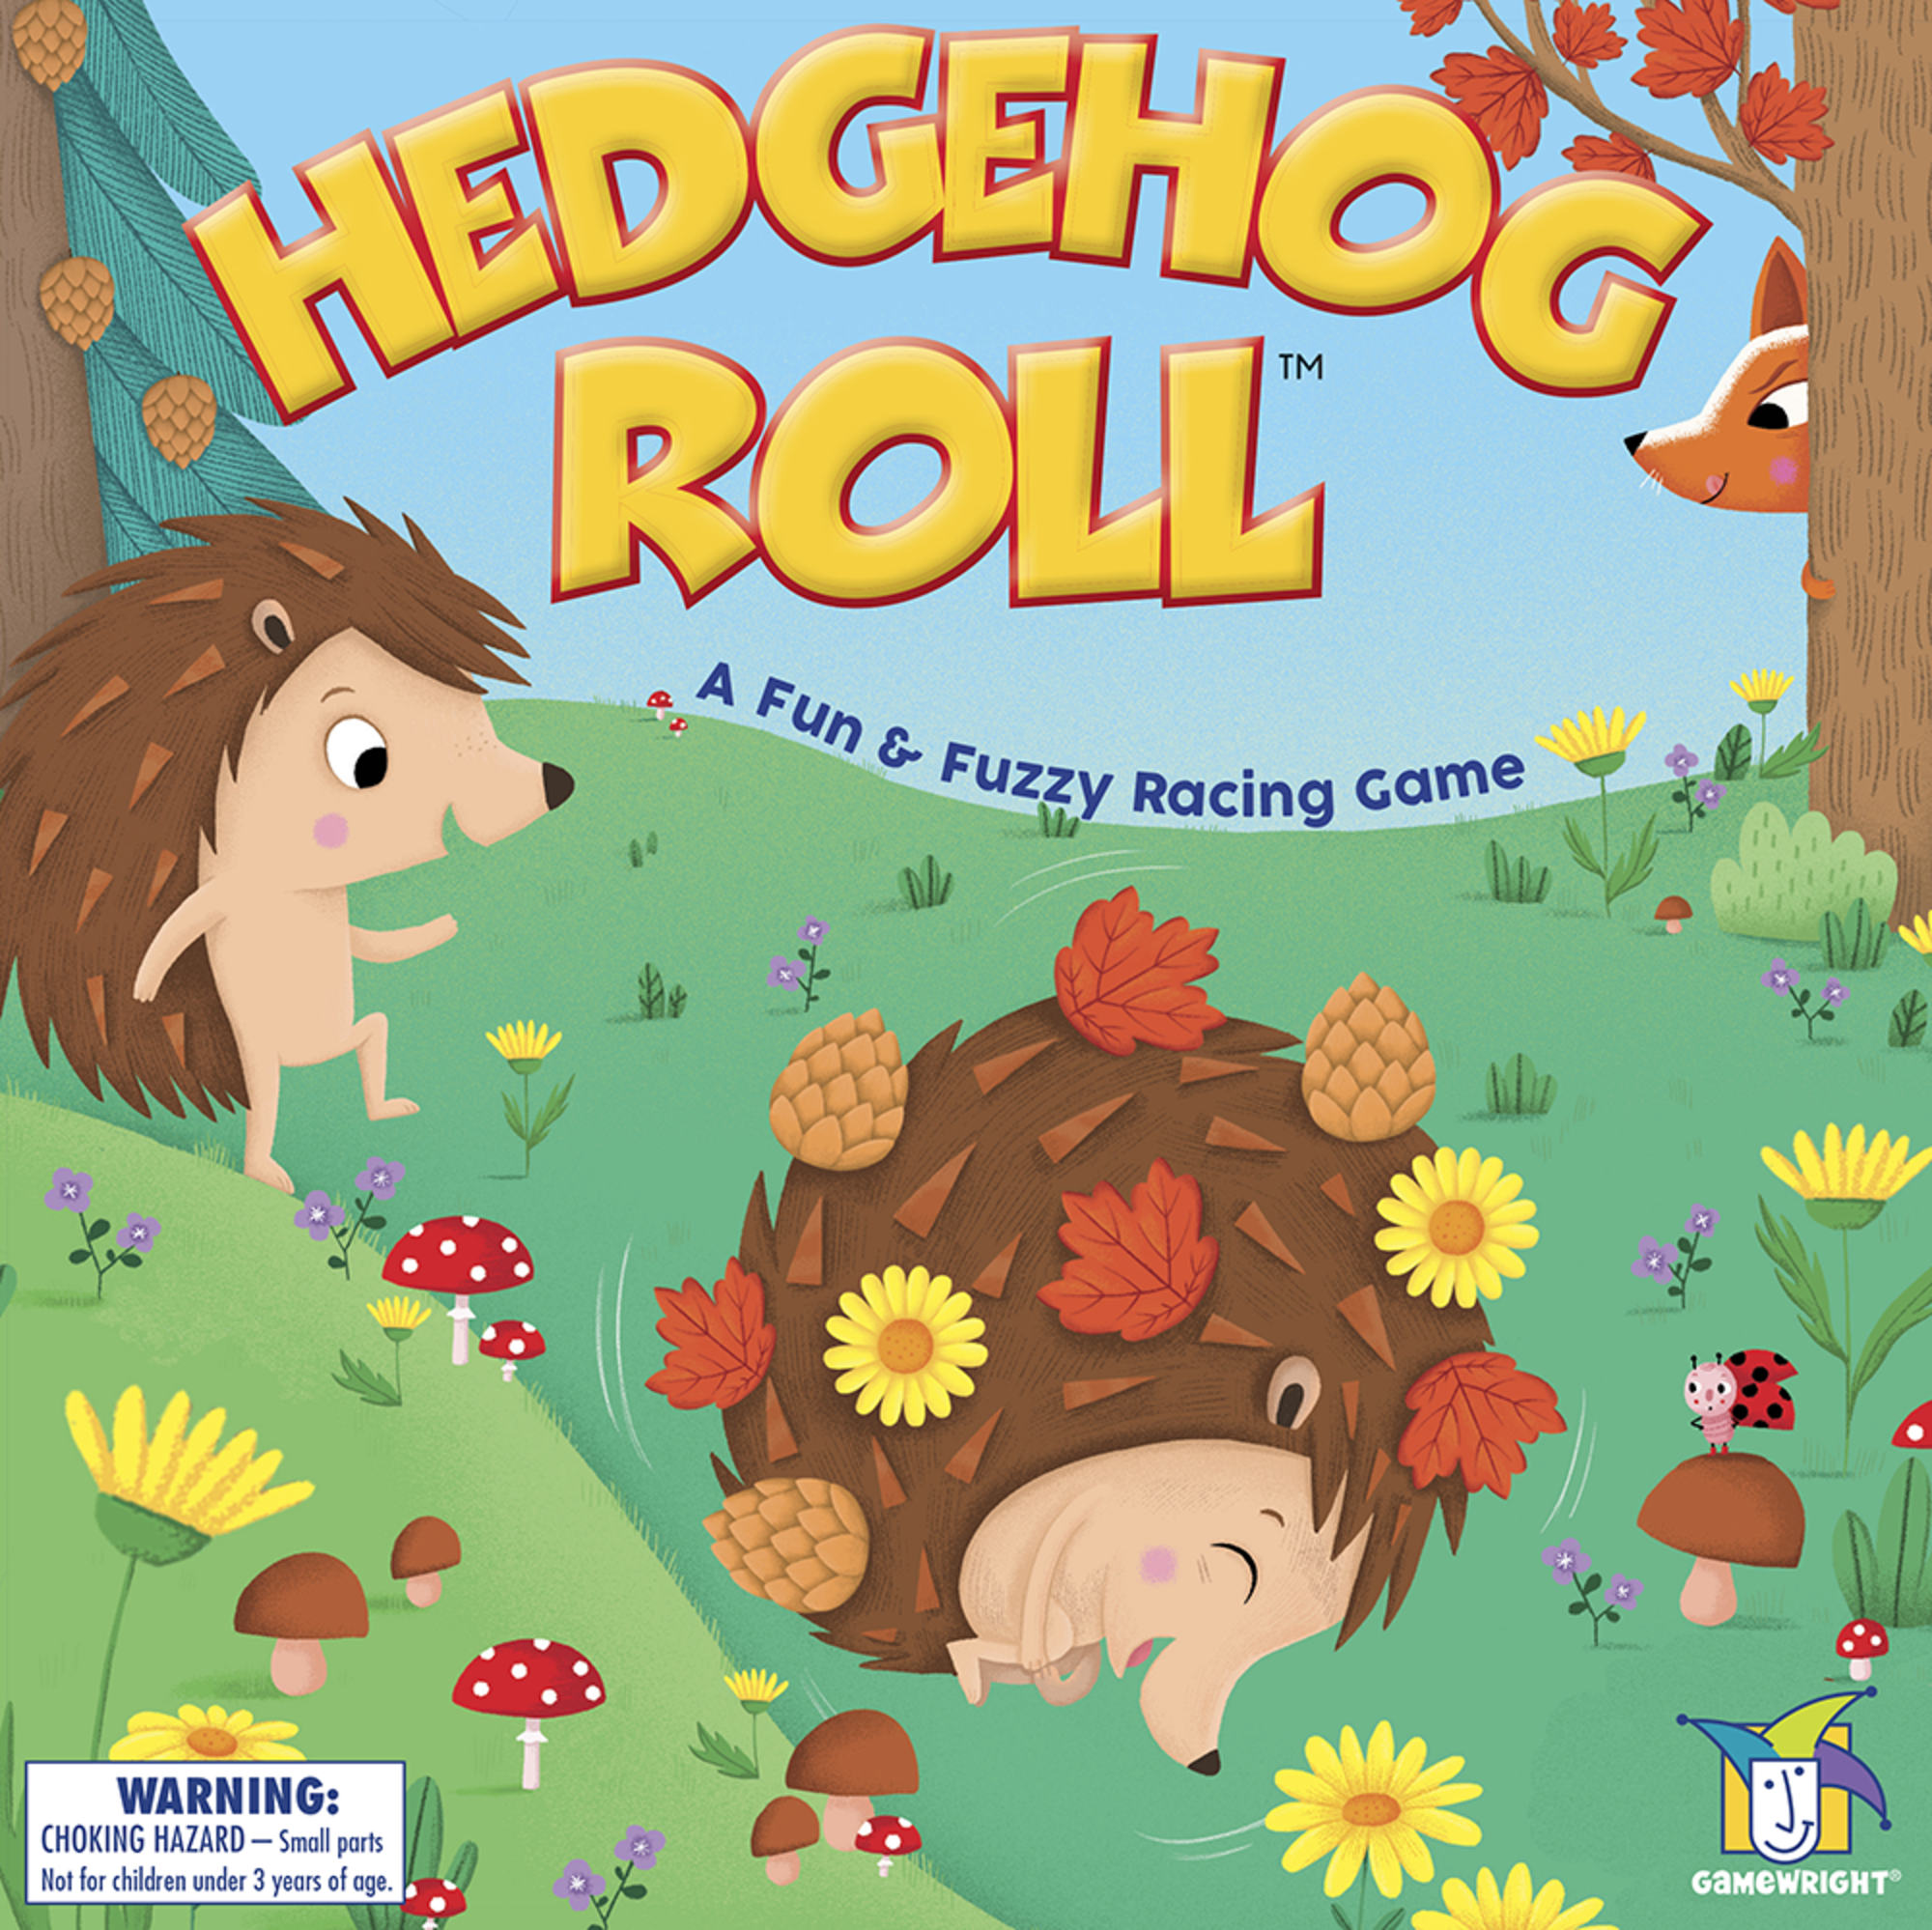 Hedgehog Rolltrade